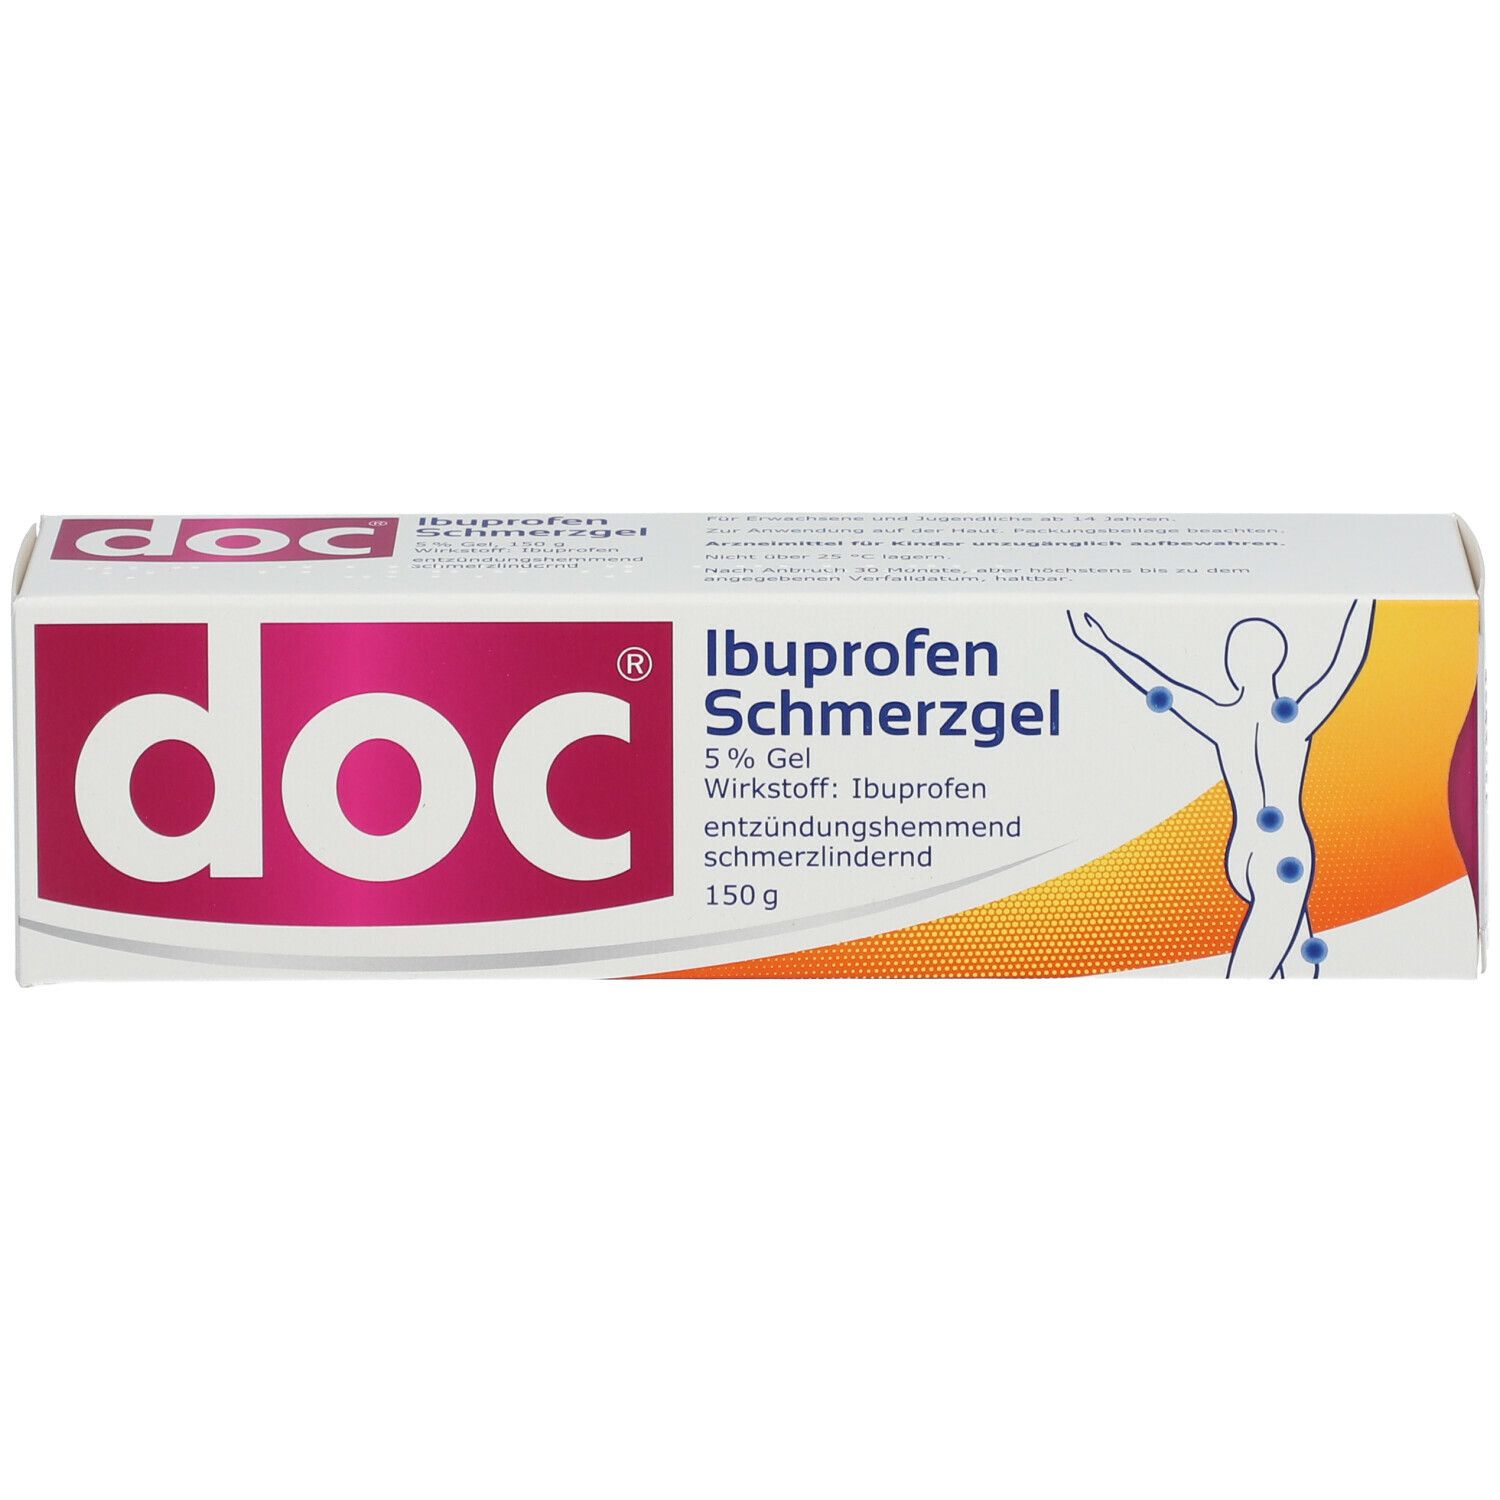 doc® Ibuprofen Schmerzgel 5%